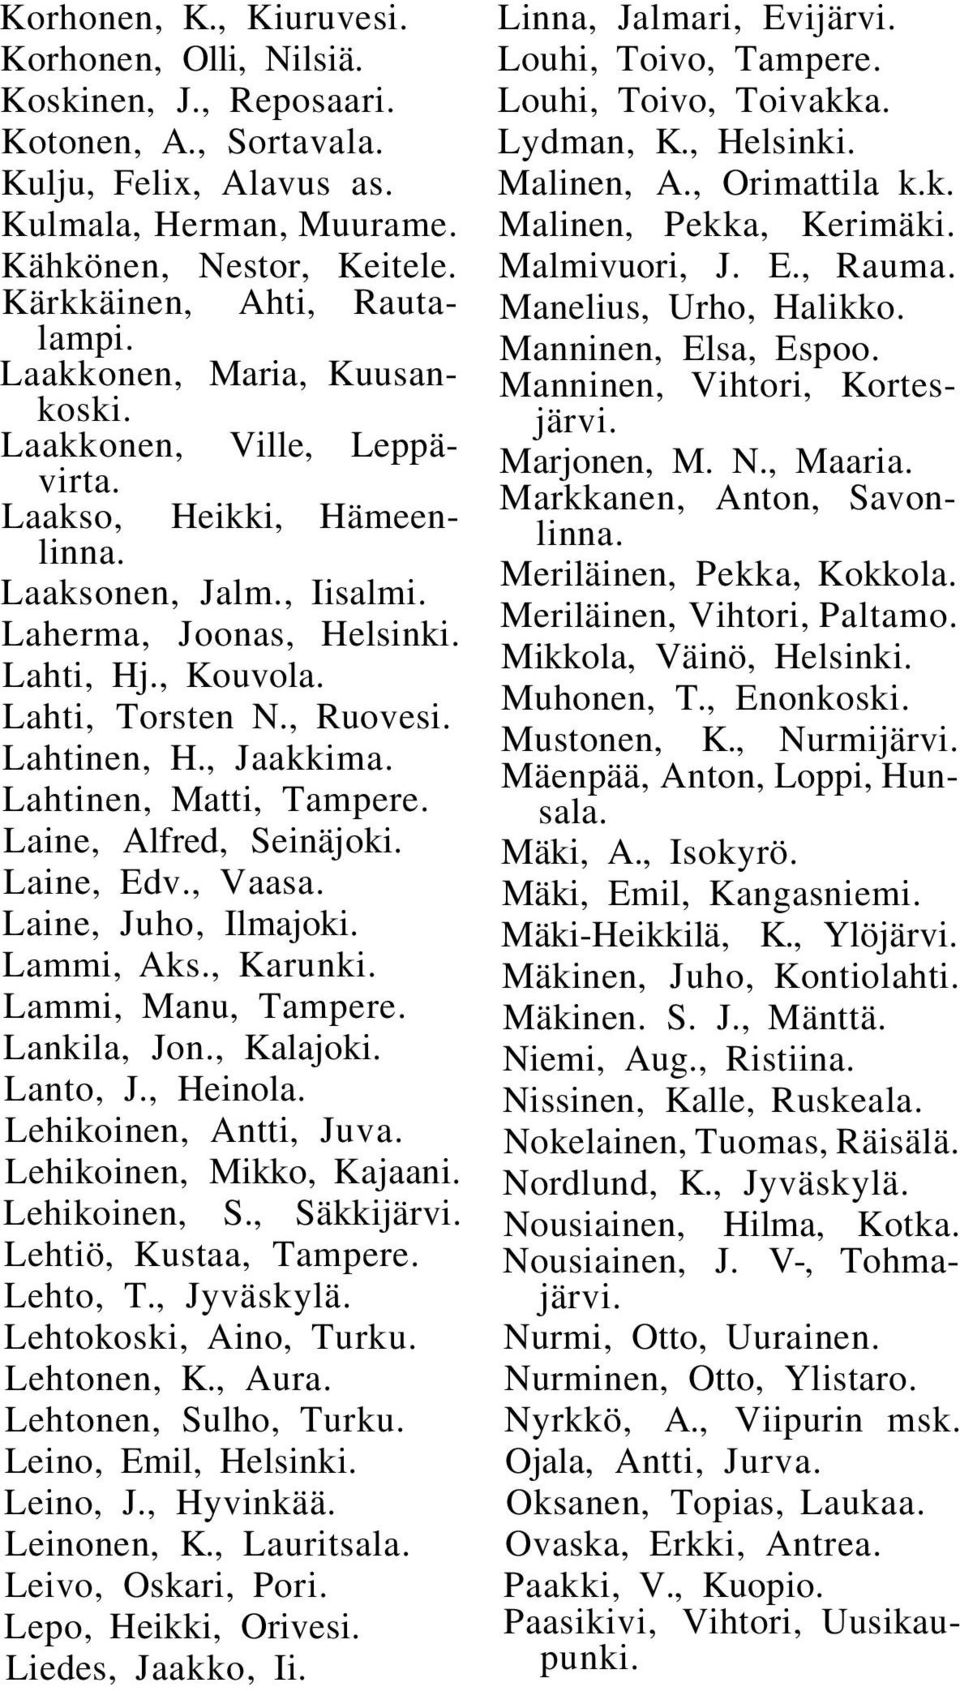 Lahti, Torsten N., Ruovesi. Lahtinen, H., Jaakkima. Lahtinen, Matti, Tampere. Laine, Alfred, Seinäjoki. Laine, Edv., Vaasa. Laine, Juho, Ilmajoki. Lammi, Aks., Karunki. Lammi, Manu, Tampere.